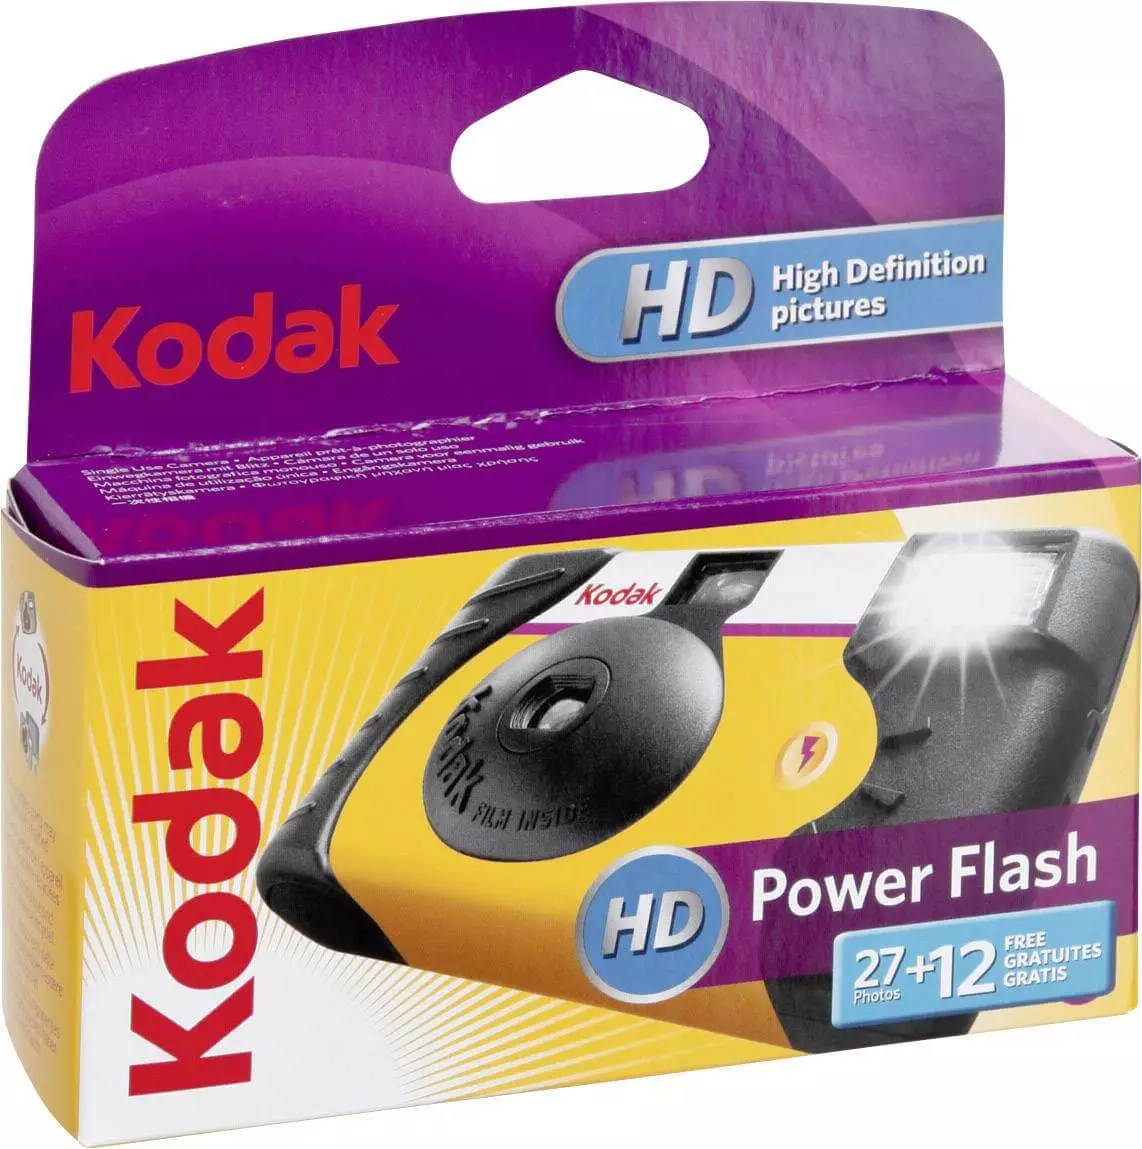 Kodak Sigle Use ISO800 Power Flash Camera 24+12 EXP